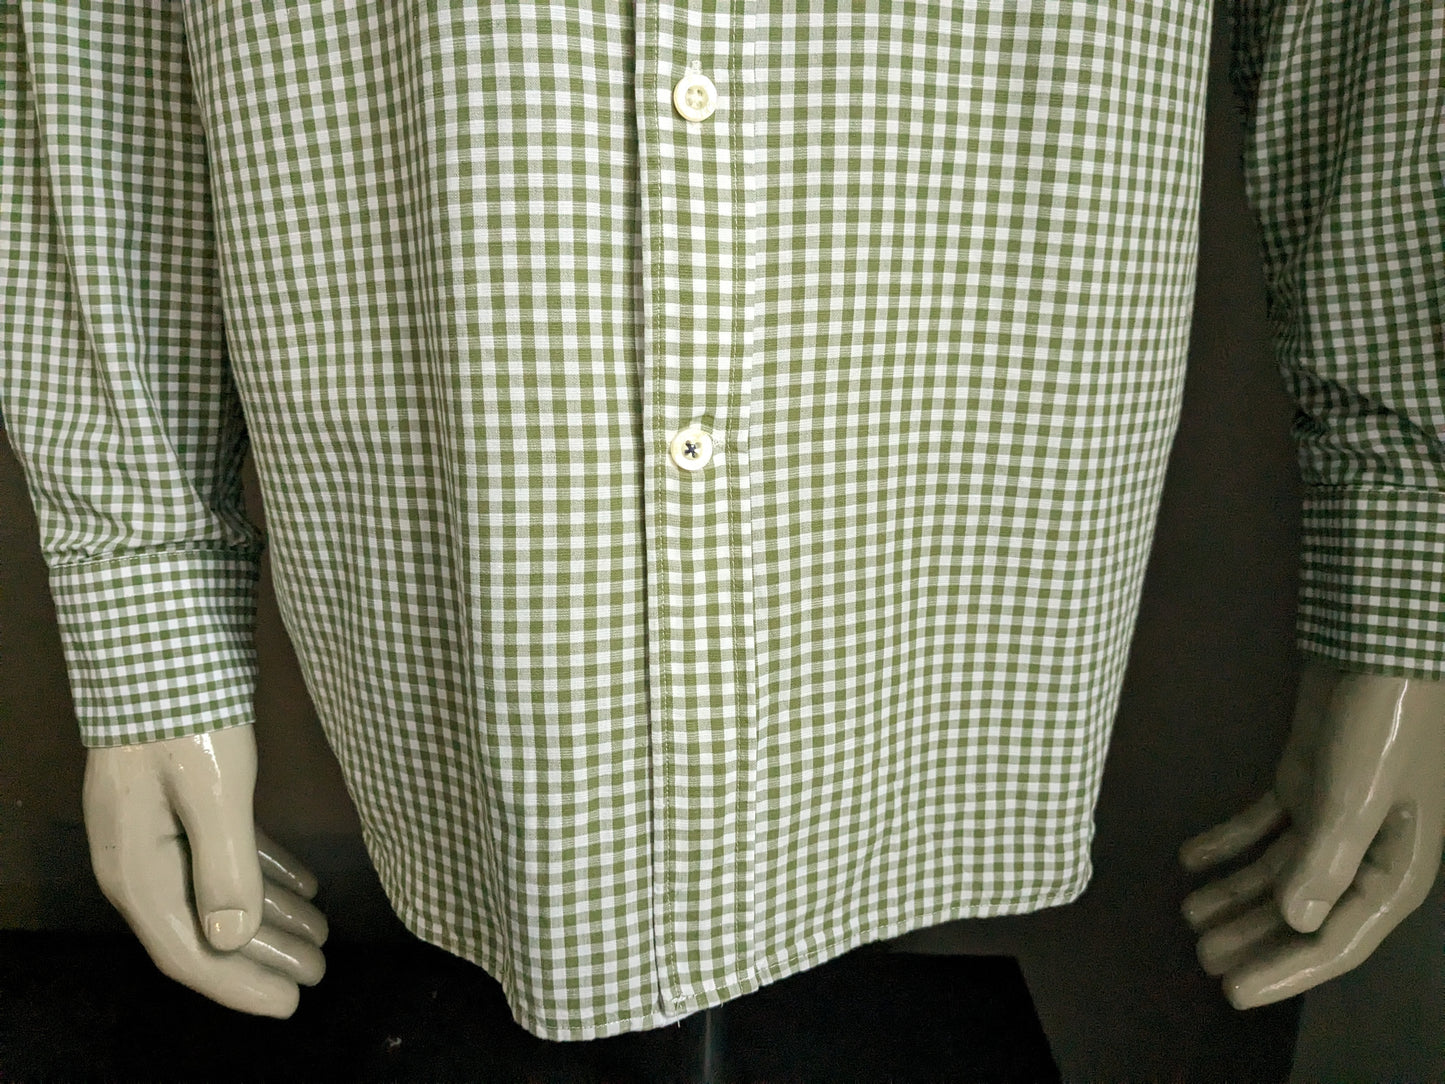 Cricket & Co Shirt. Vert blanc à carreaux. Taille xl.